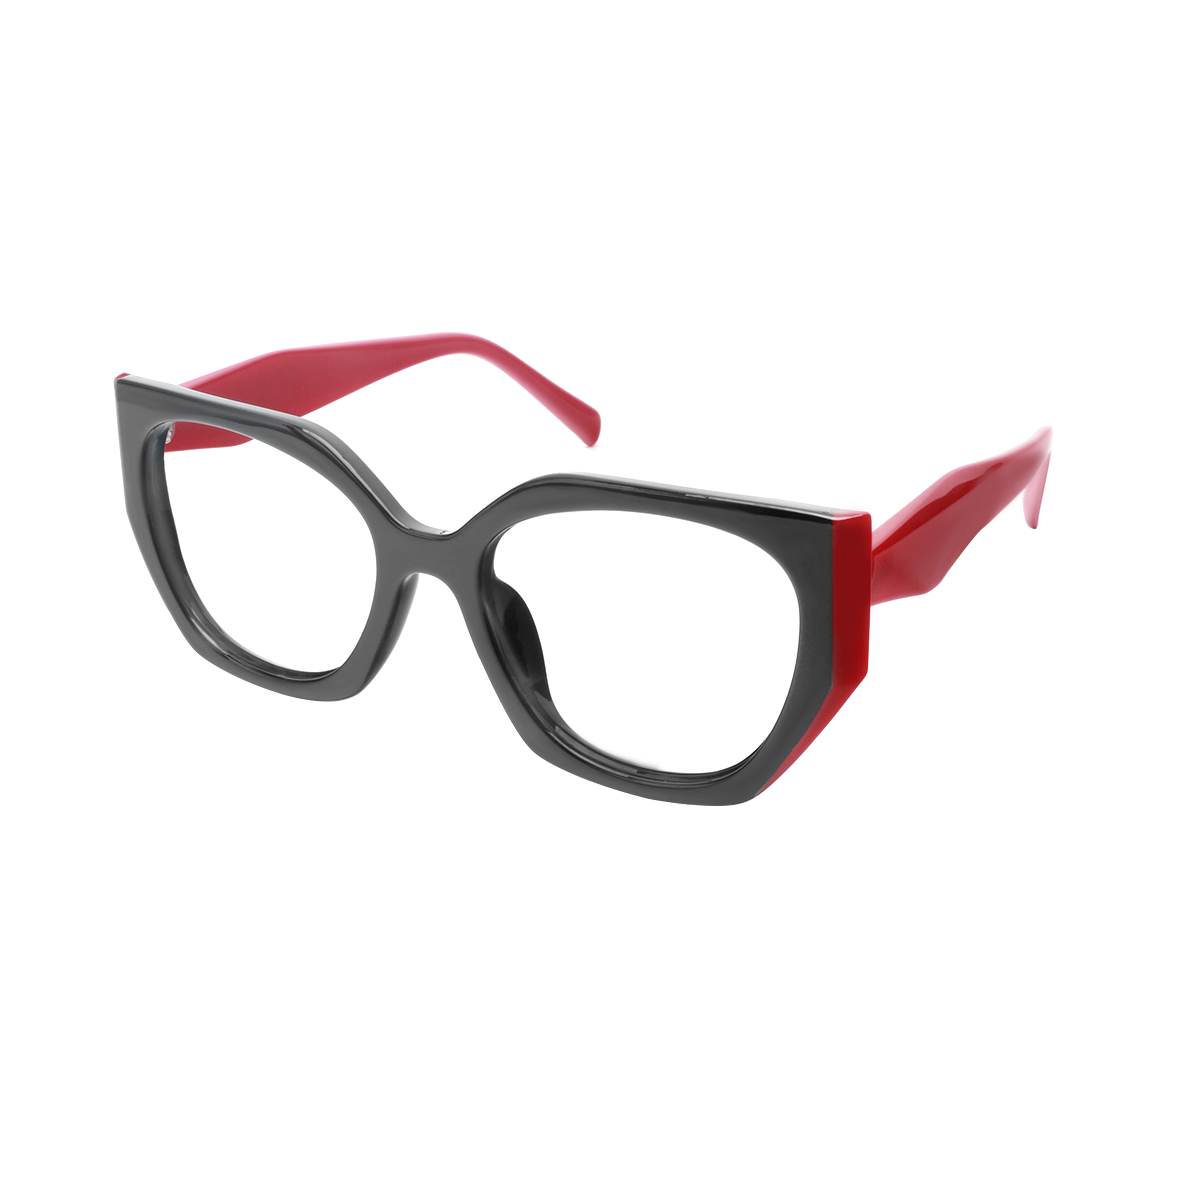 Cilicia - Geometric Red Reading Glasses for Men & Women